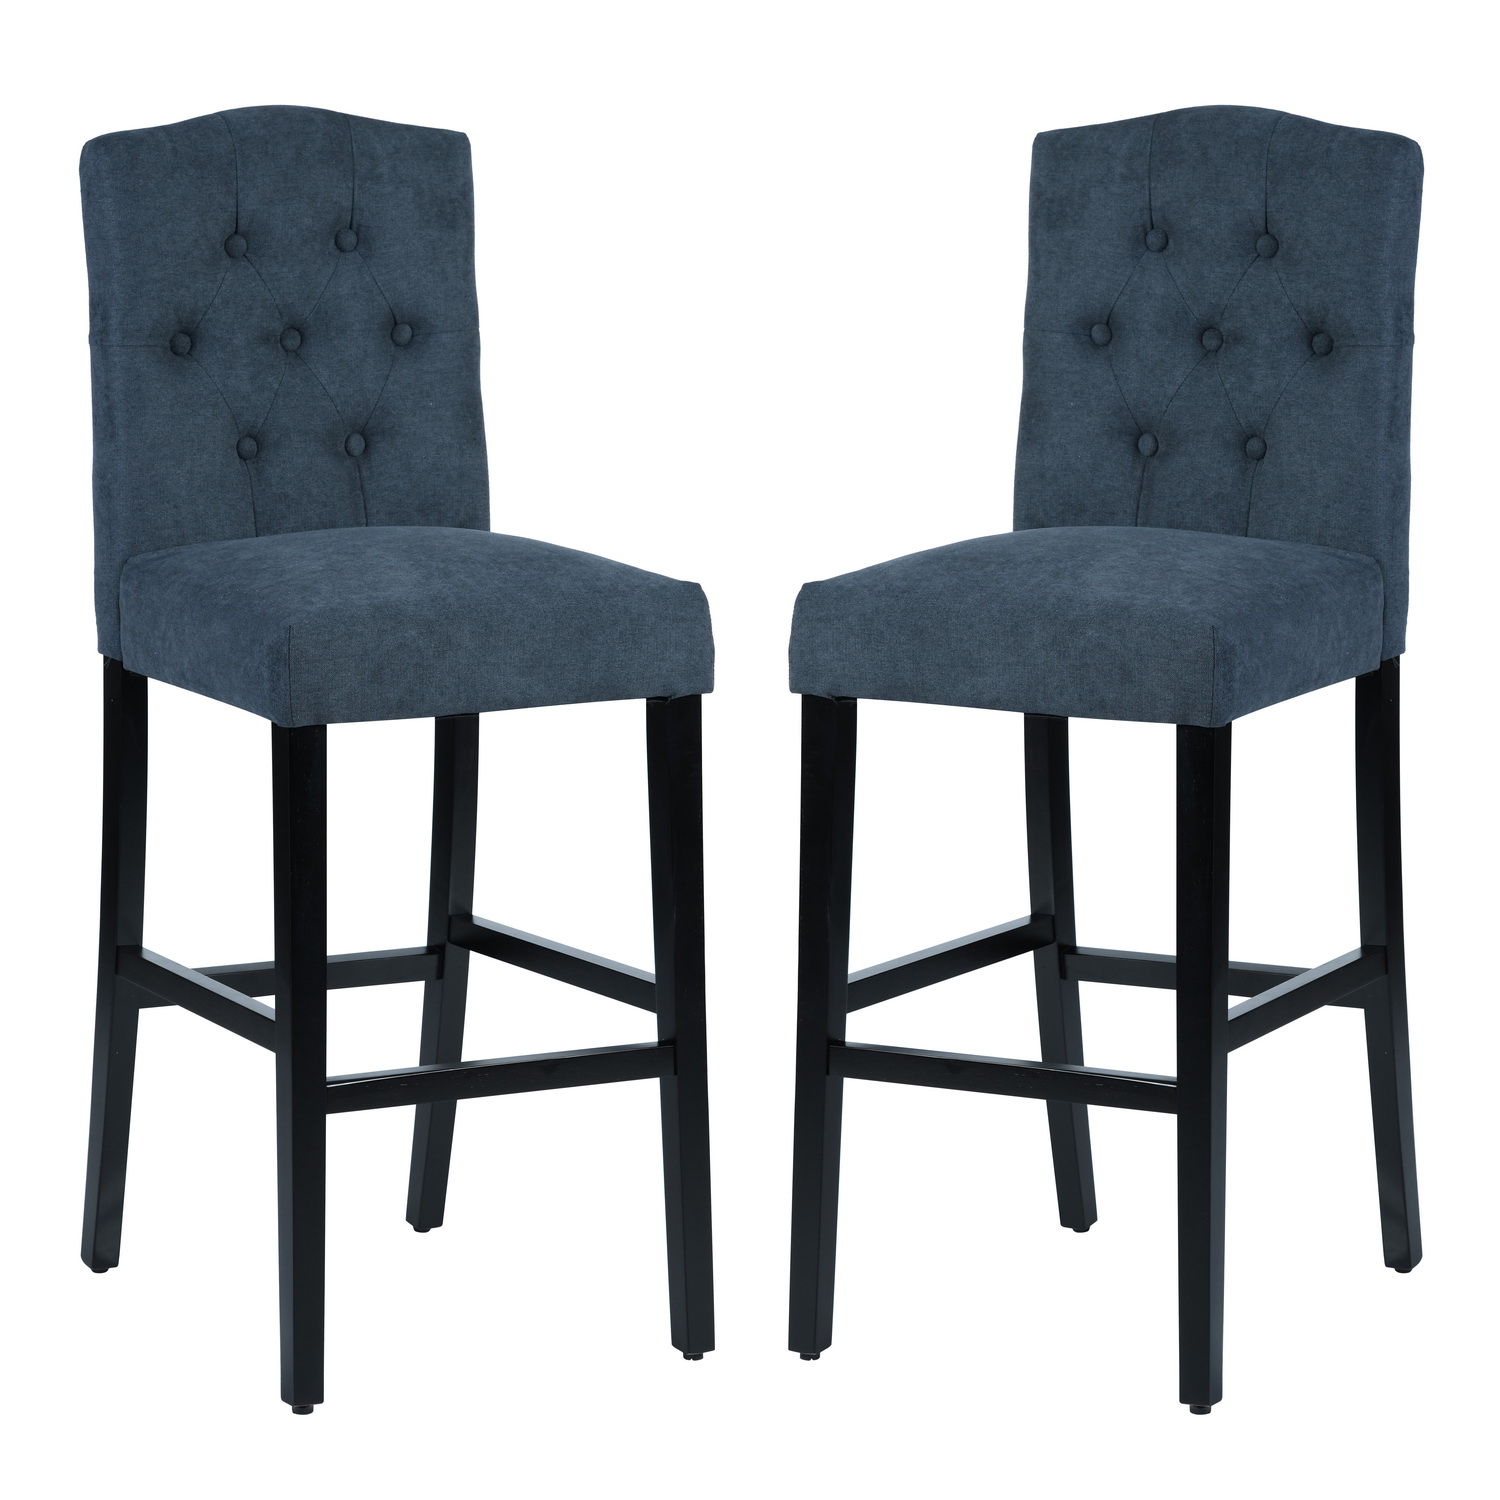 Set of 2 traditional Upholstered high stools, dark blue